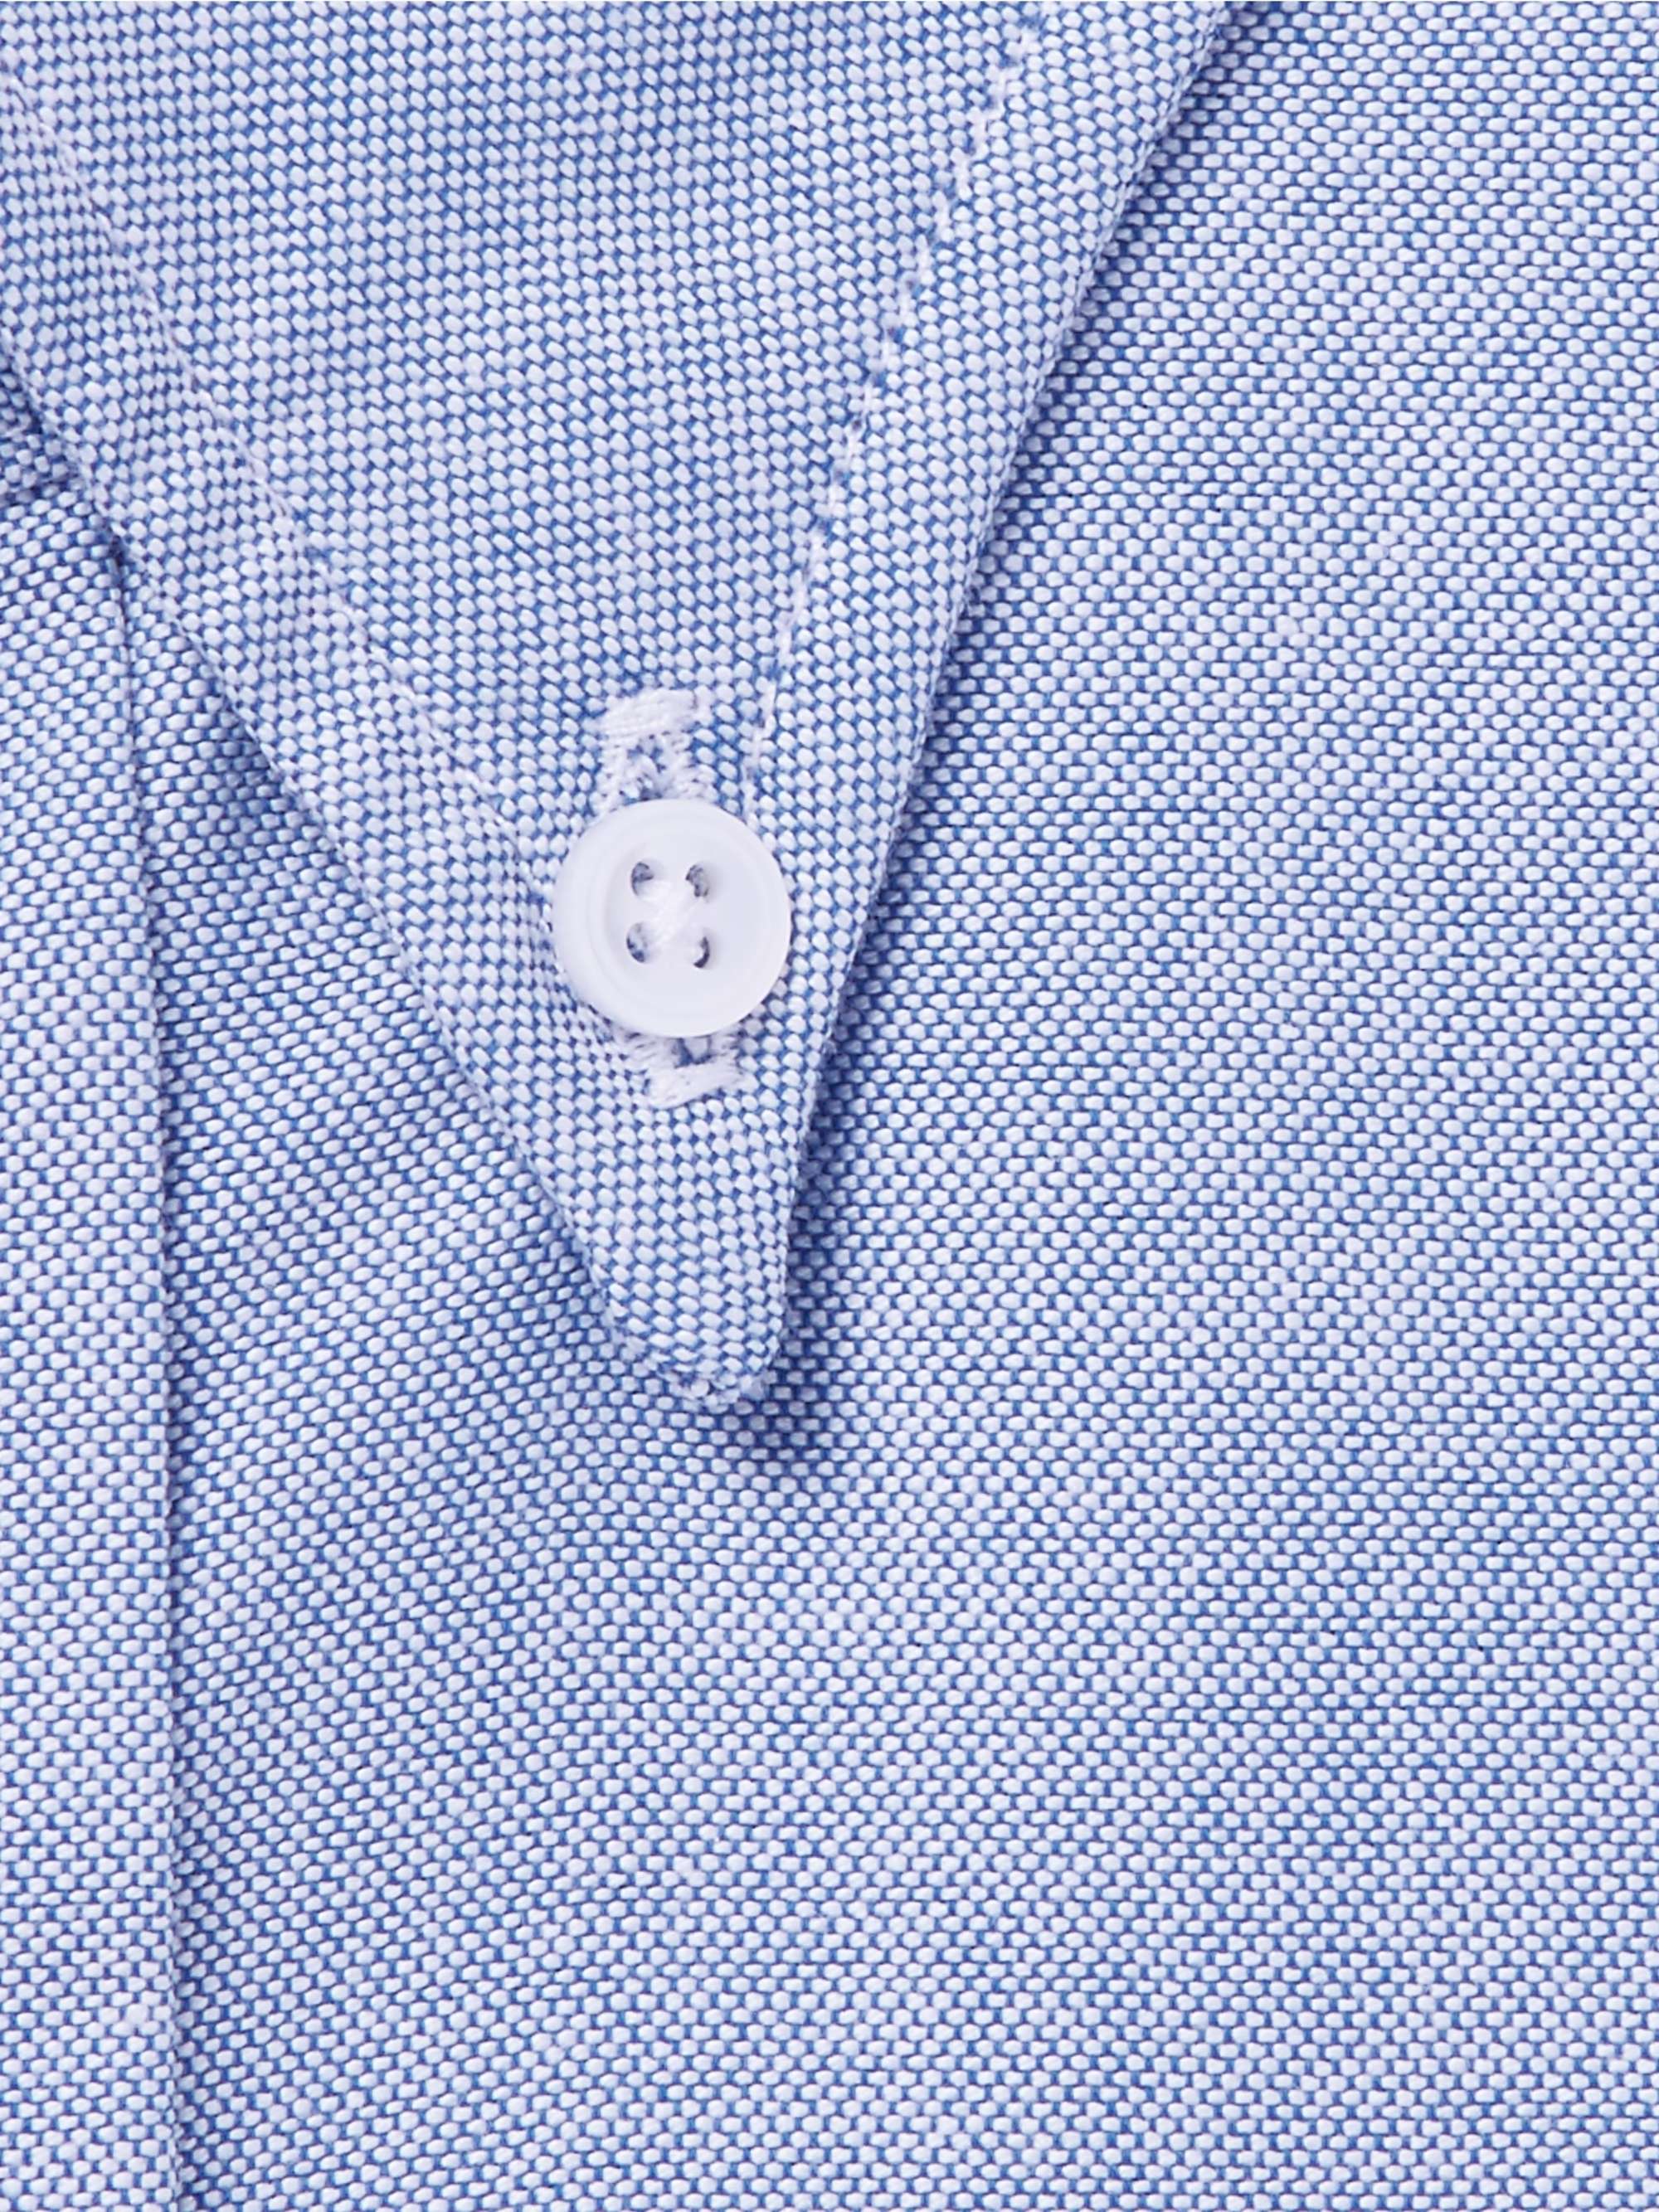 DRAKE'S Blue Button-Down Collar Cotton Oxford Shirt